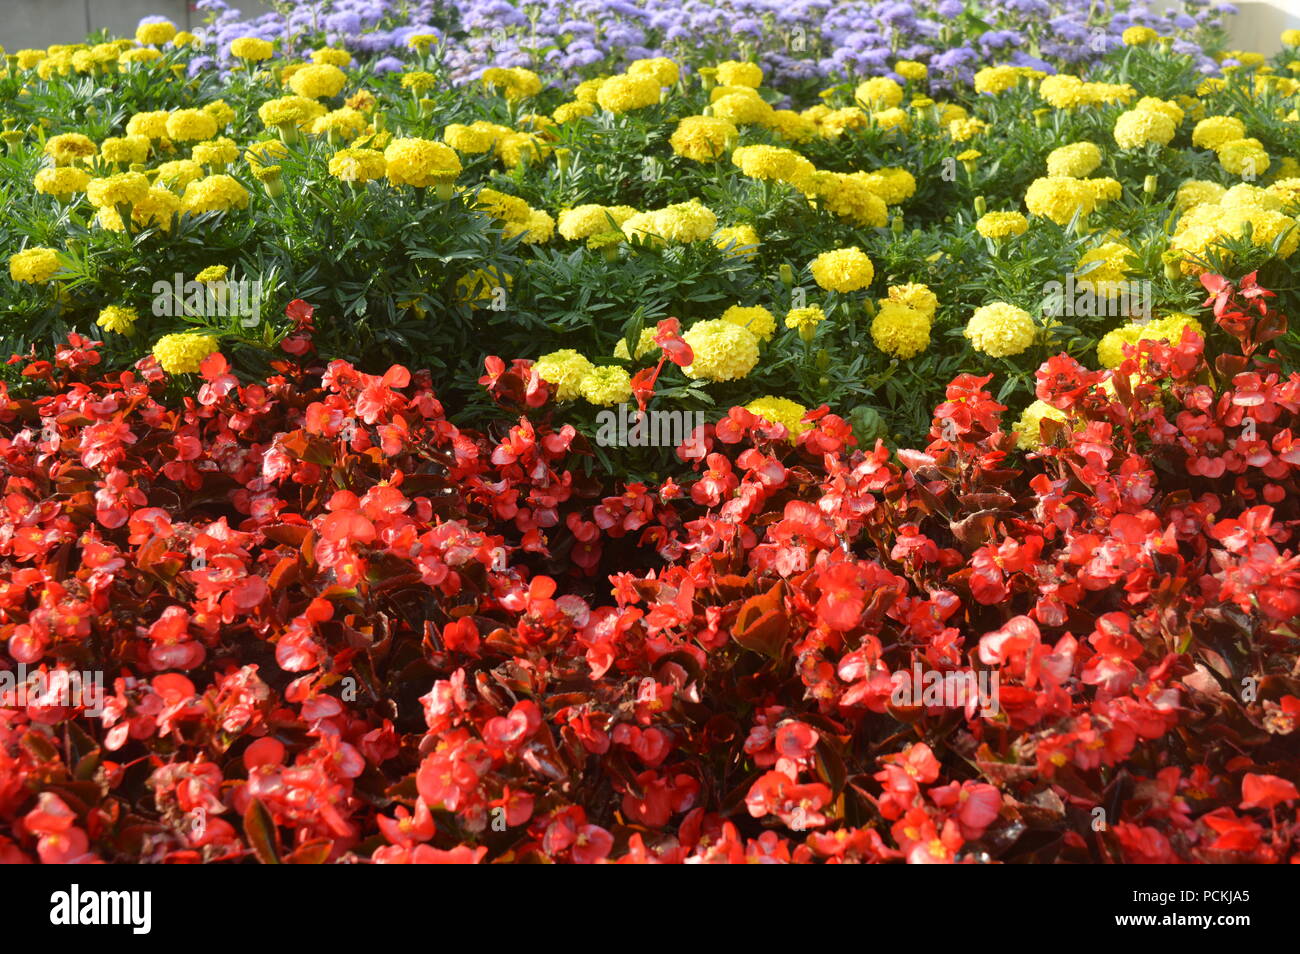 flower arrangement in a garden Stock Photo